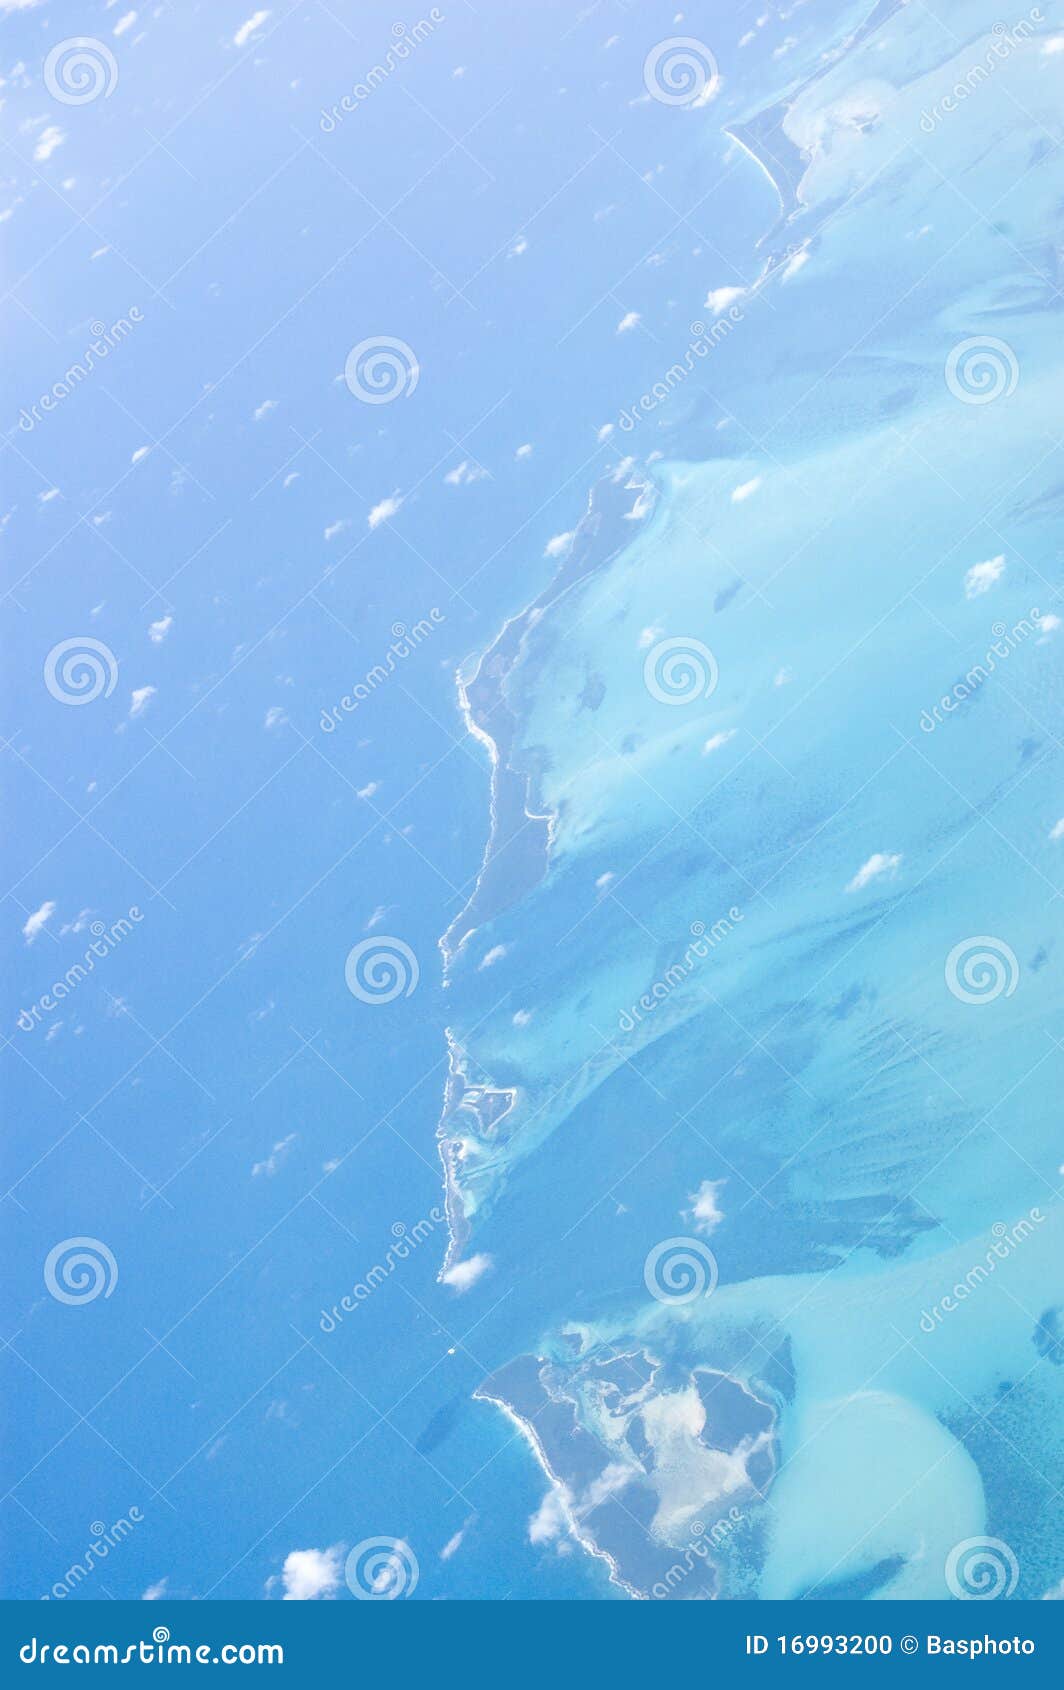 abaco islands, bahamas